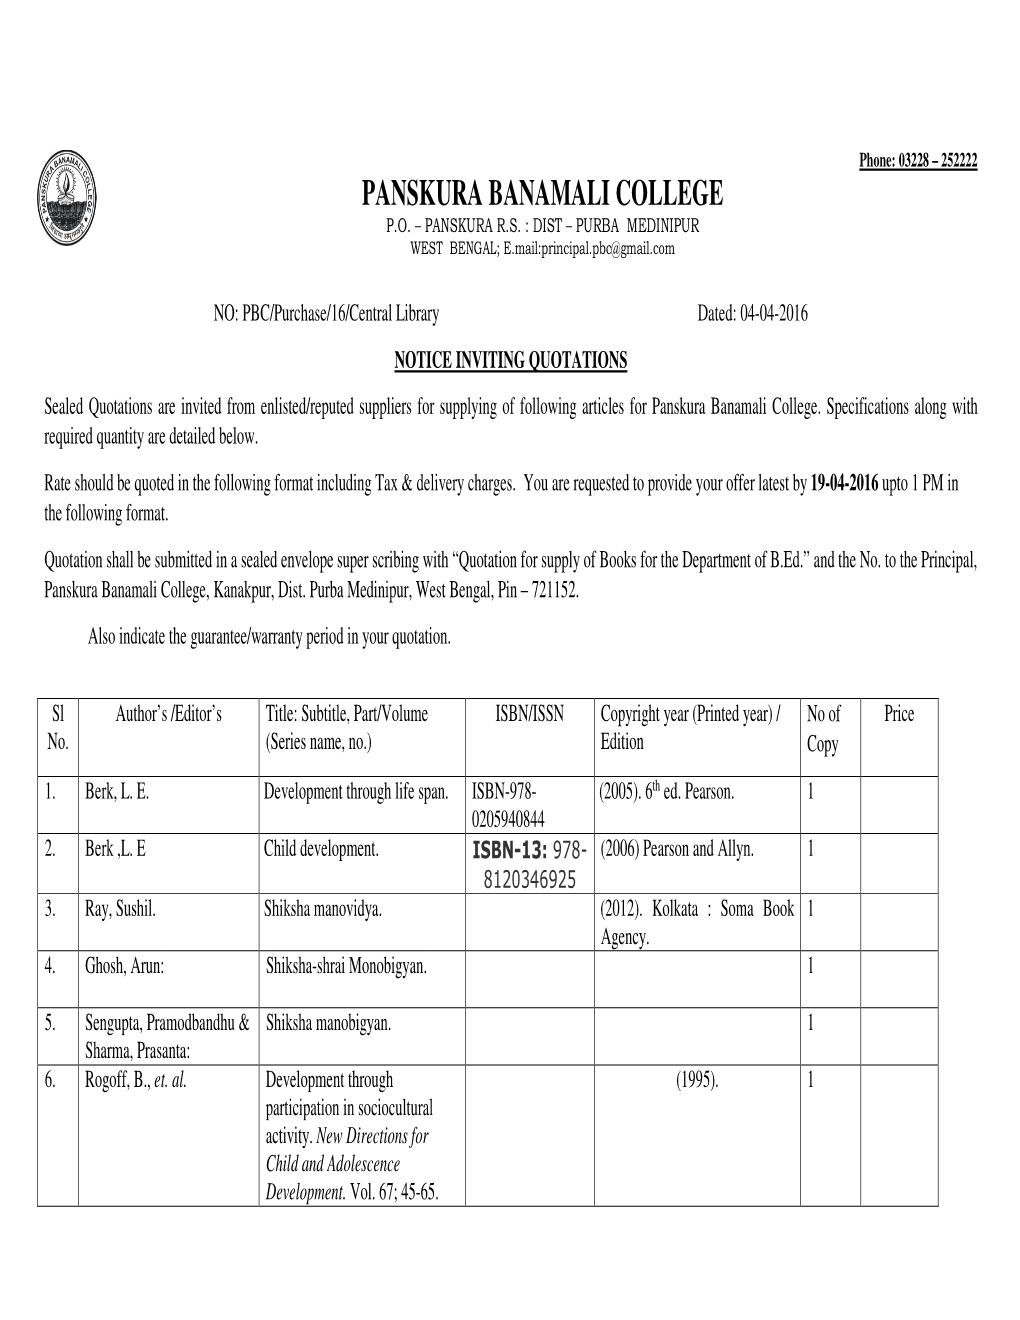 Panskura Banamali College P.O